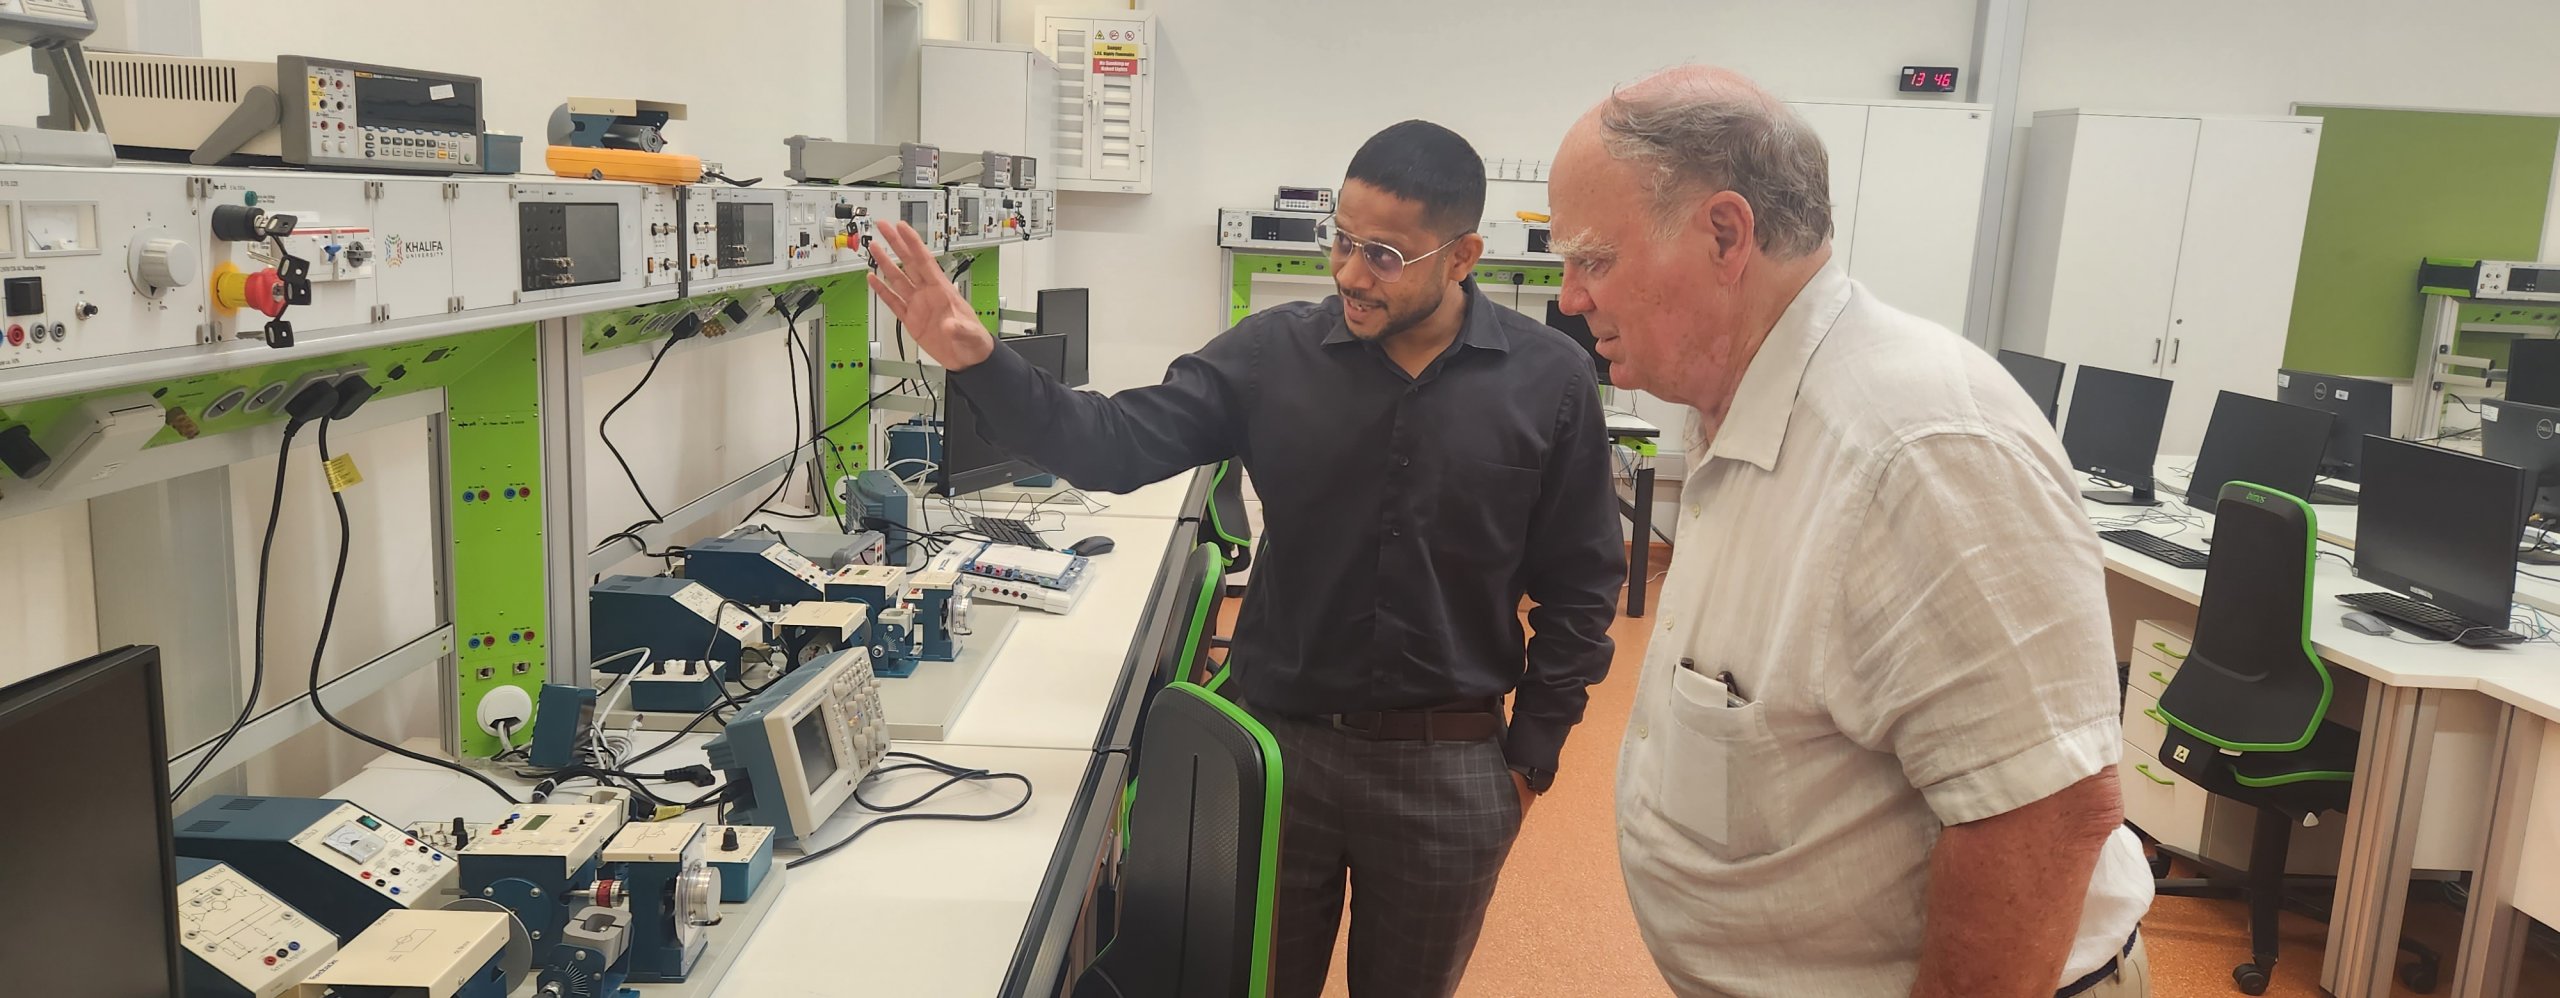 MIT Professor Visits Khalifa University’s Labs and Facilities